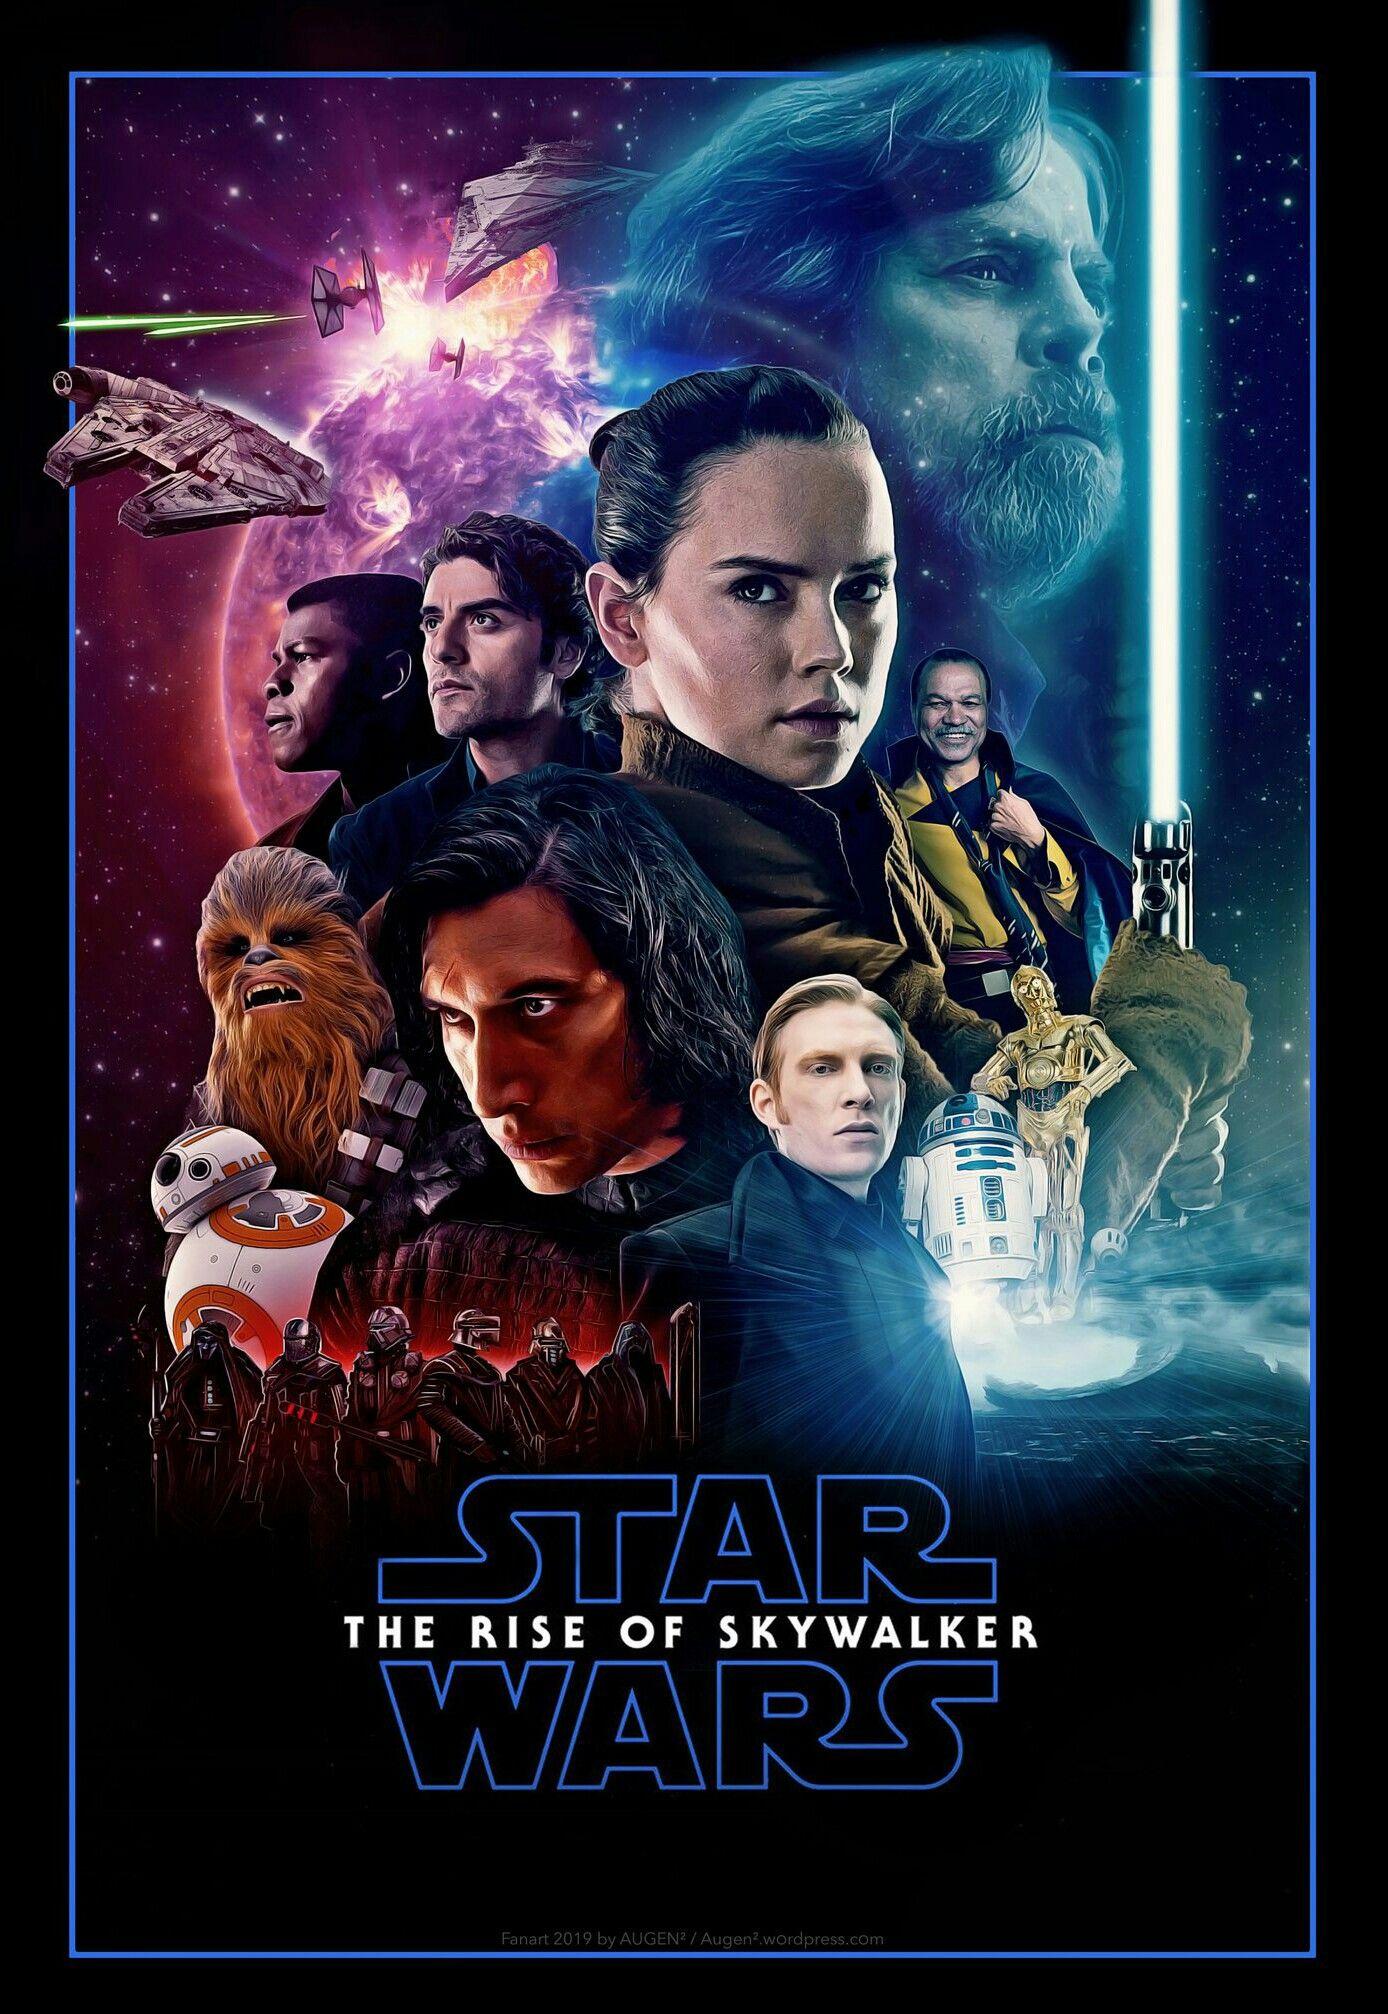 THE RISE OF SKYWALKER. Star wars poster, Star wars watch